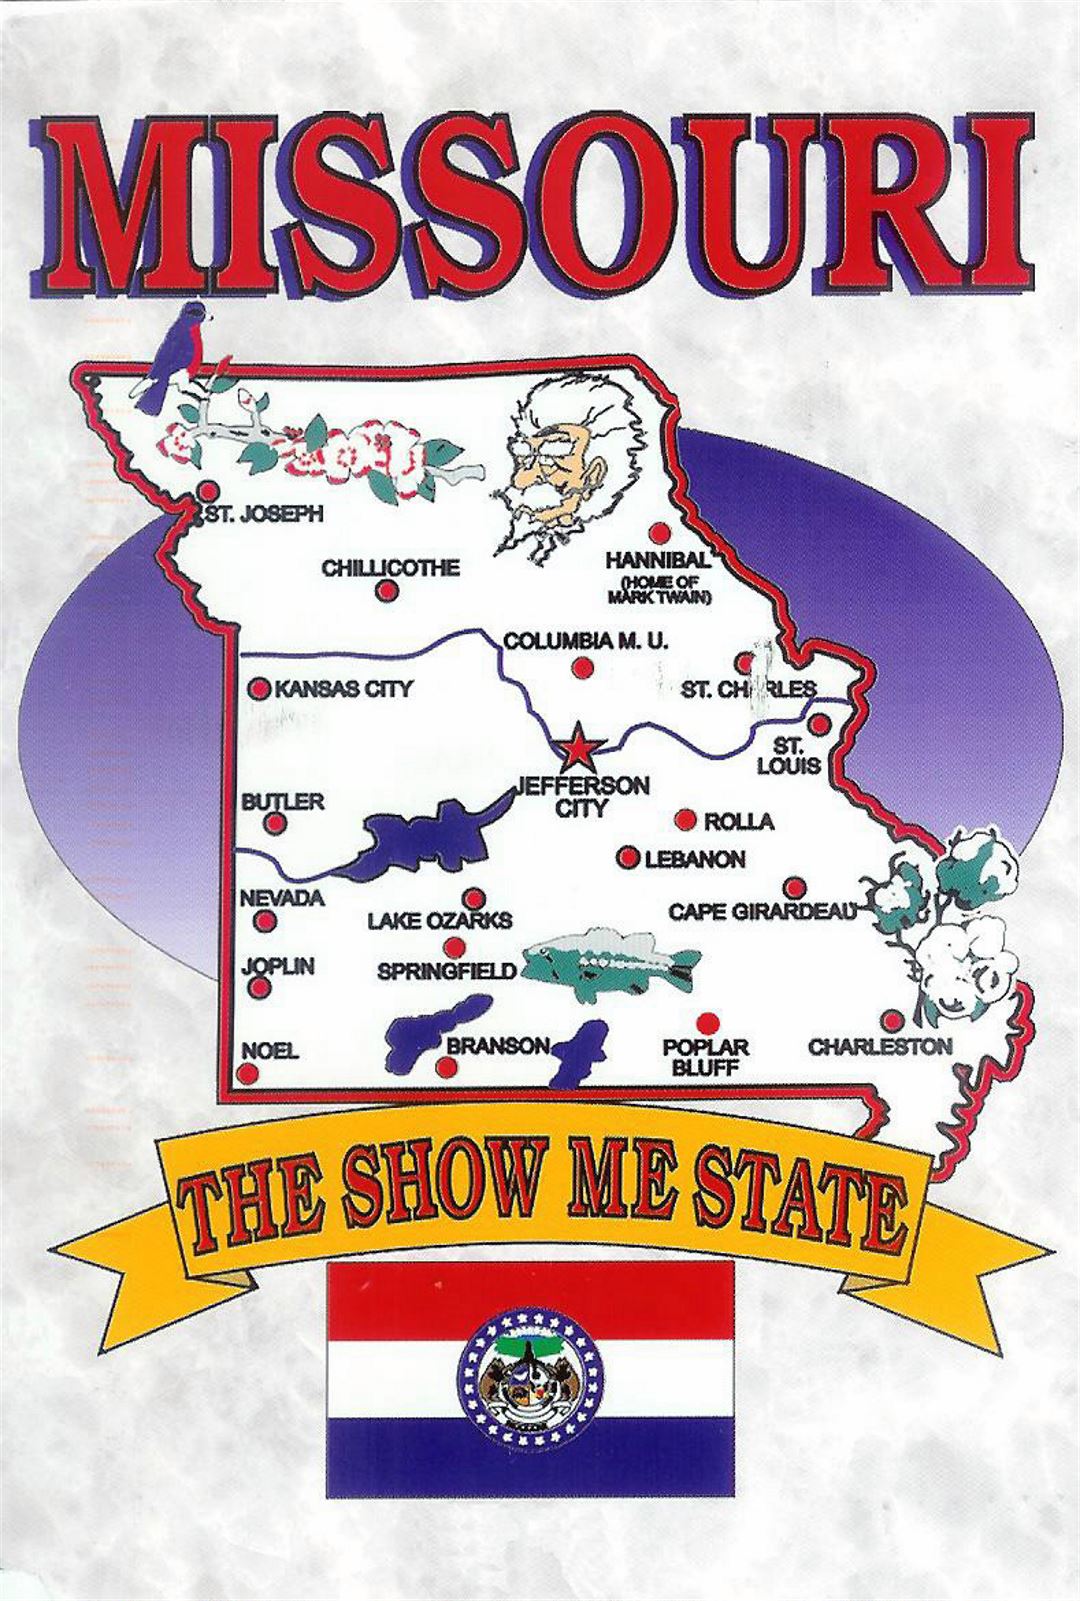 Detailed tourist illustrared map of Missouri state